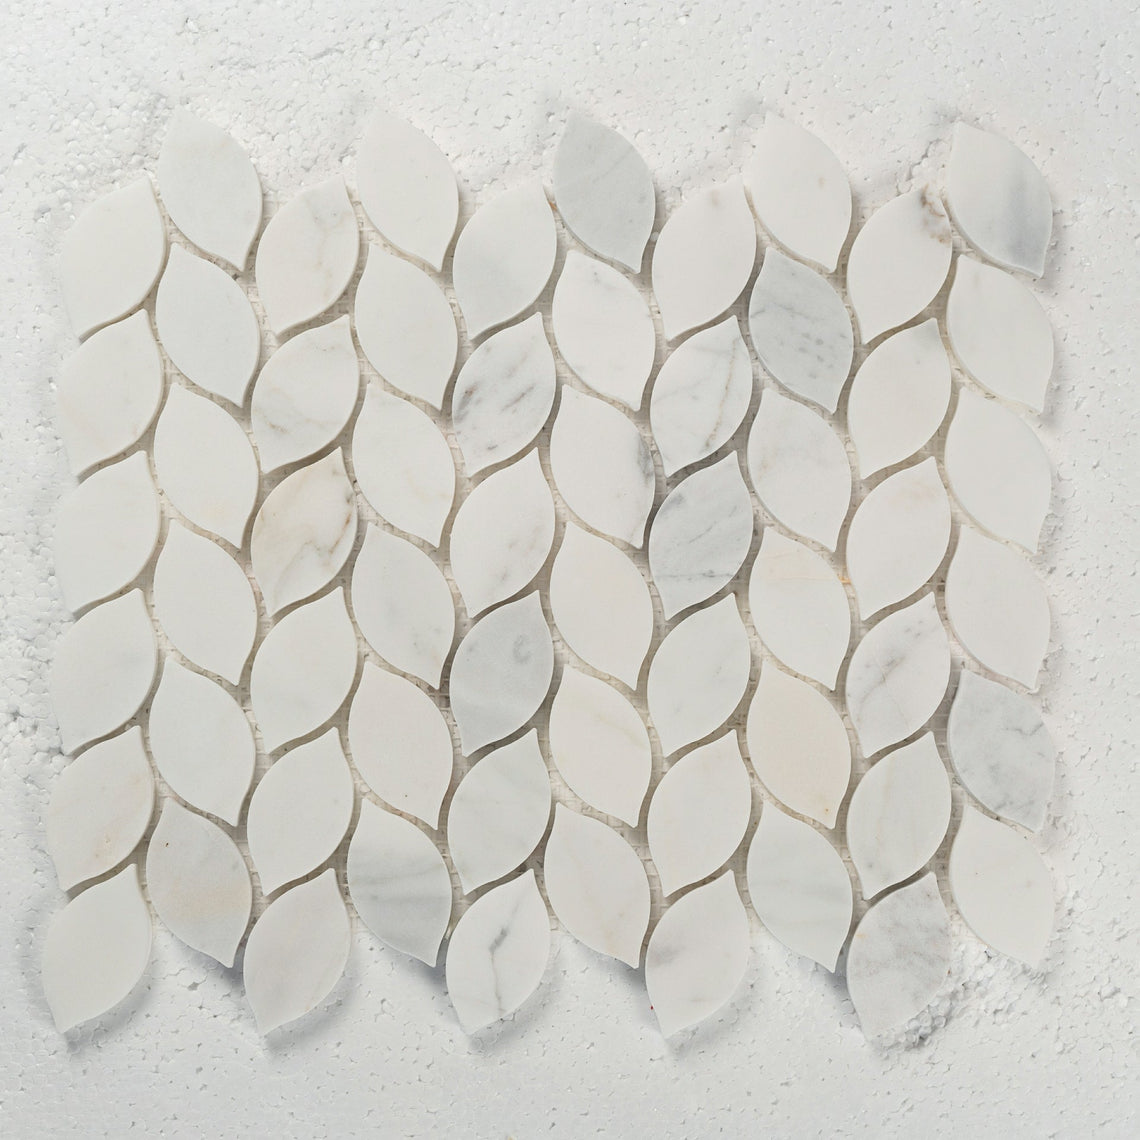 12 X 12 in. Statuario Leaf White Honed Marble Mosaic